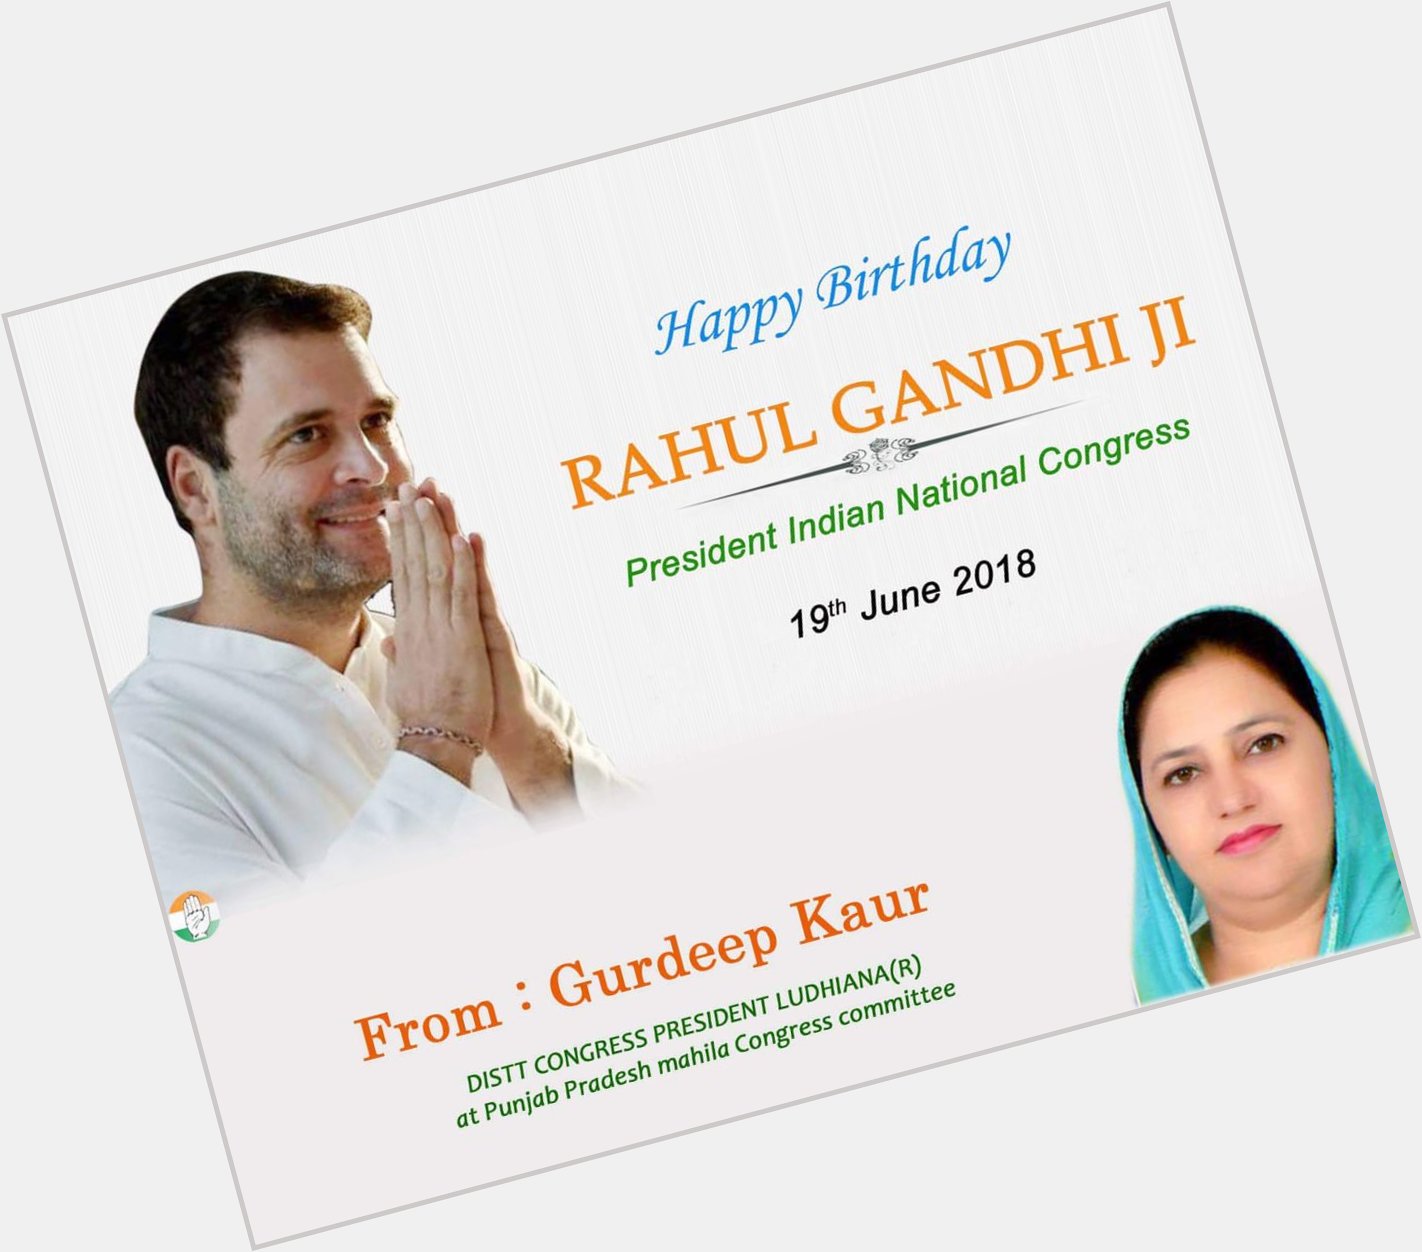 Happy Birthday to President Indian National Congress RAHUL GANDHI JI 